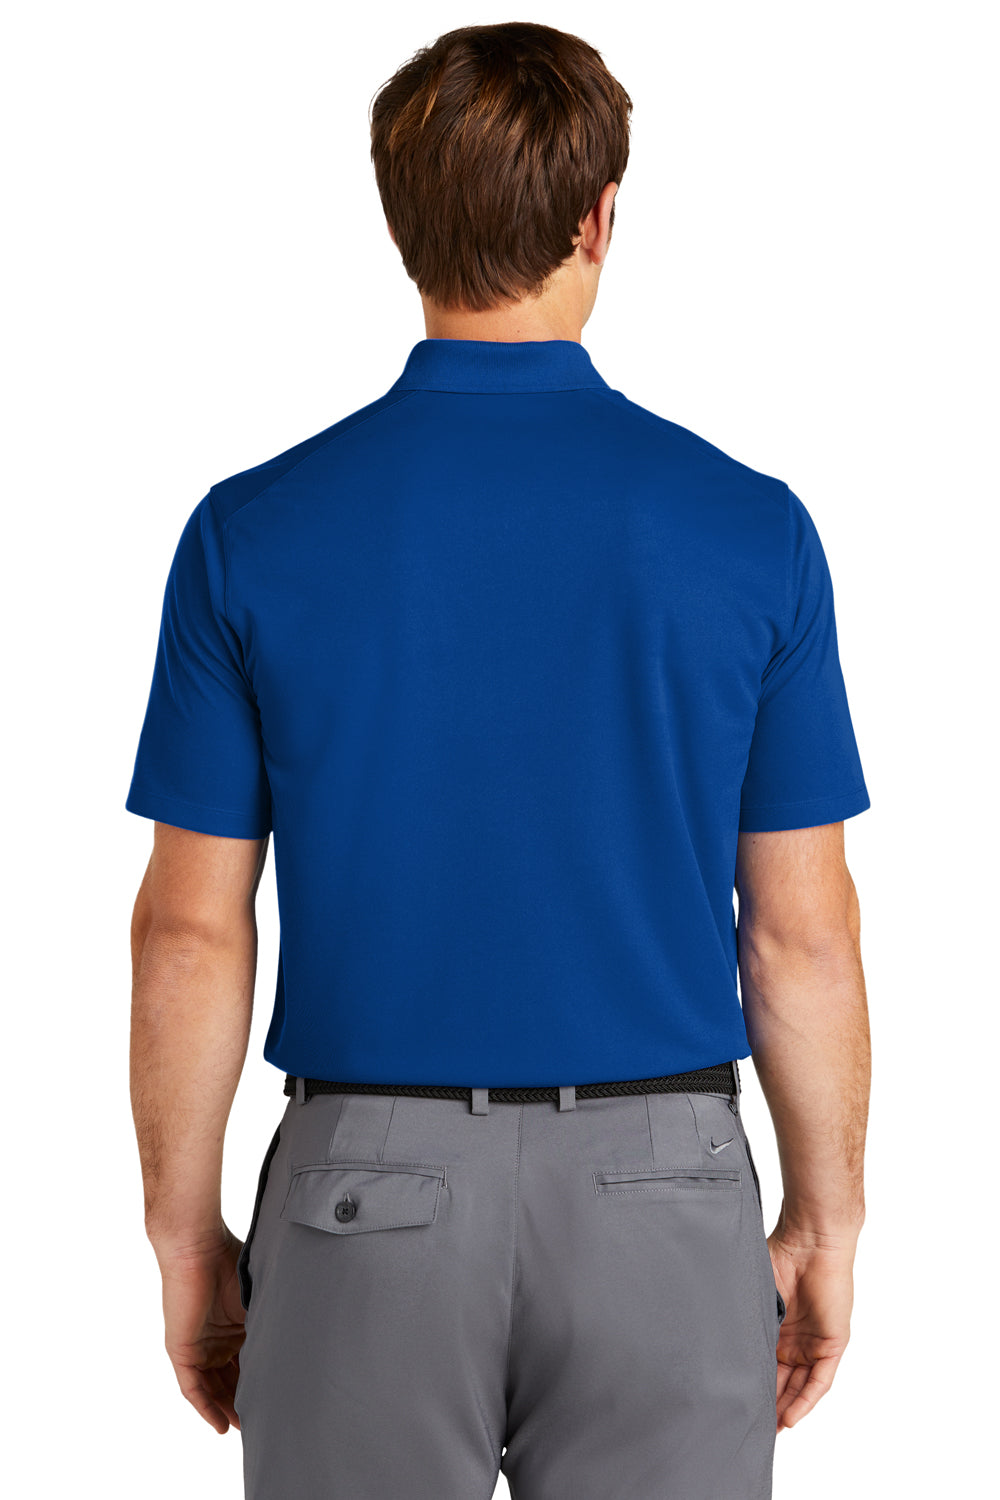 Nike NKDC2103 Mens Dri-Fit Moisture Wicking Micro Pique 2.0 Short Sleeve Polo Shirt w/ Pocket Gym Blue Model Back